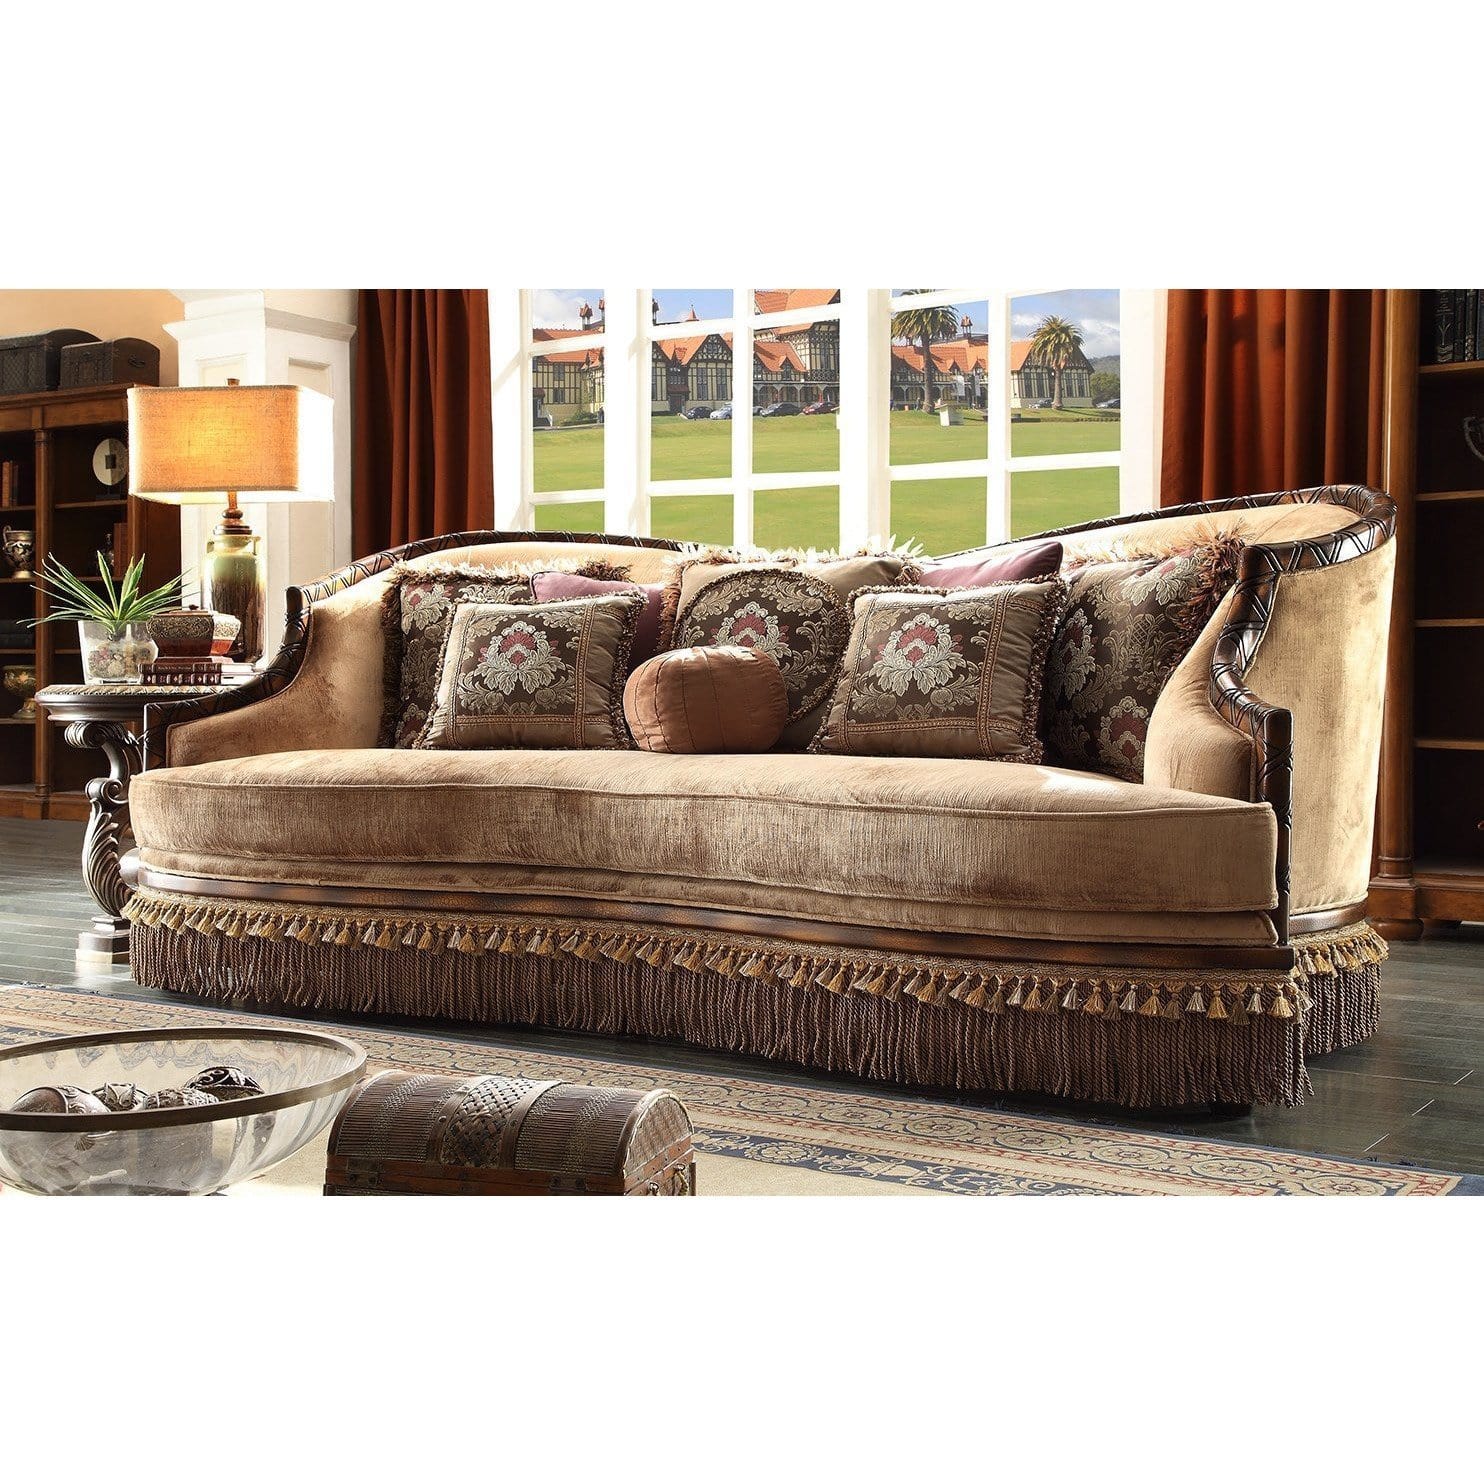 Homey Design 3Pc Sofa Set HD-1631-SSET3